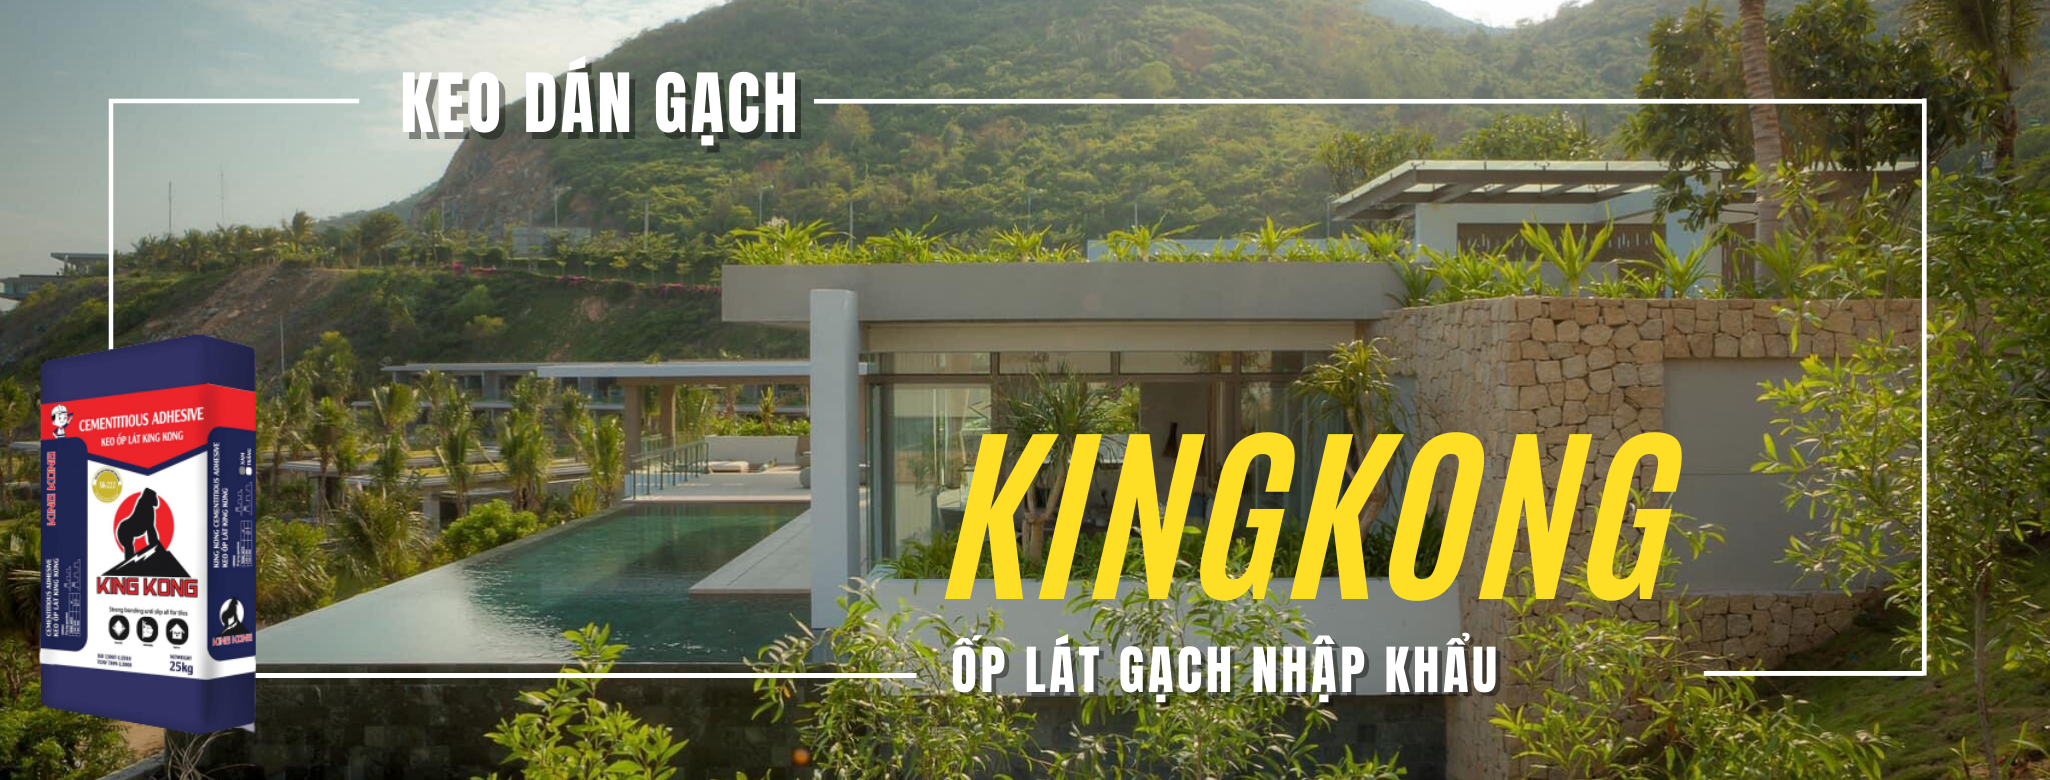 keo-dan-gach-KingKong